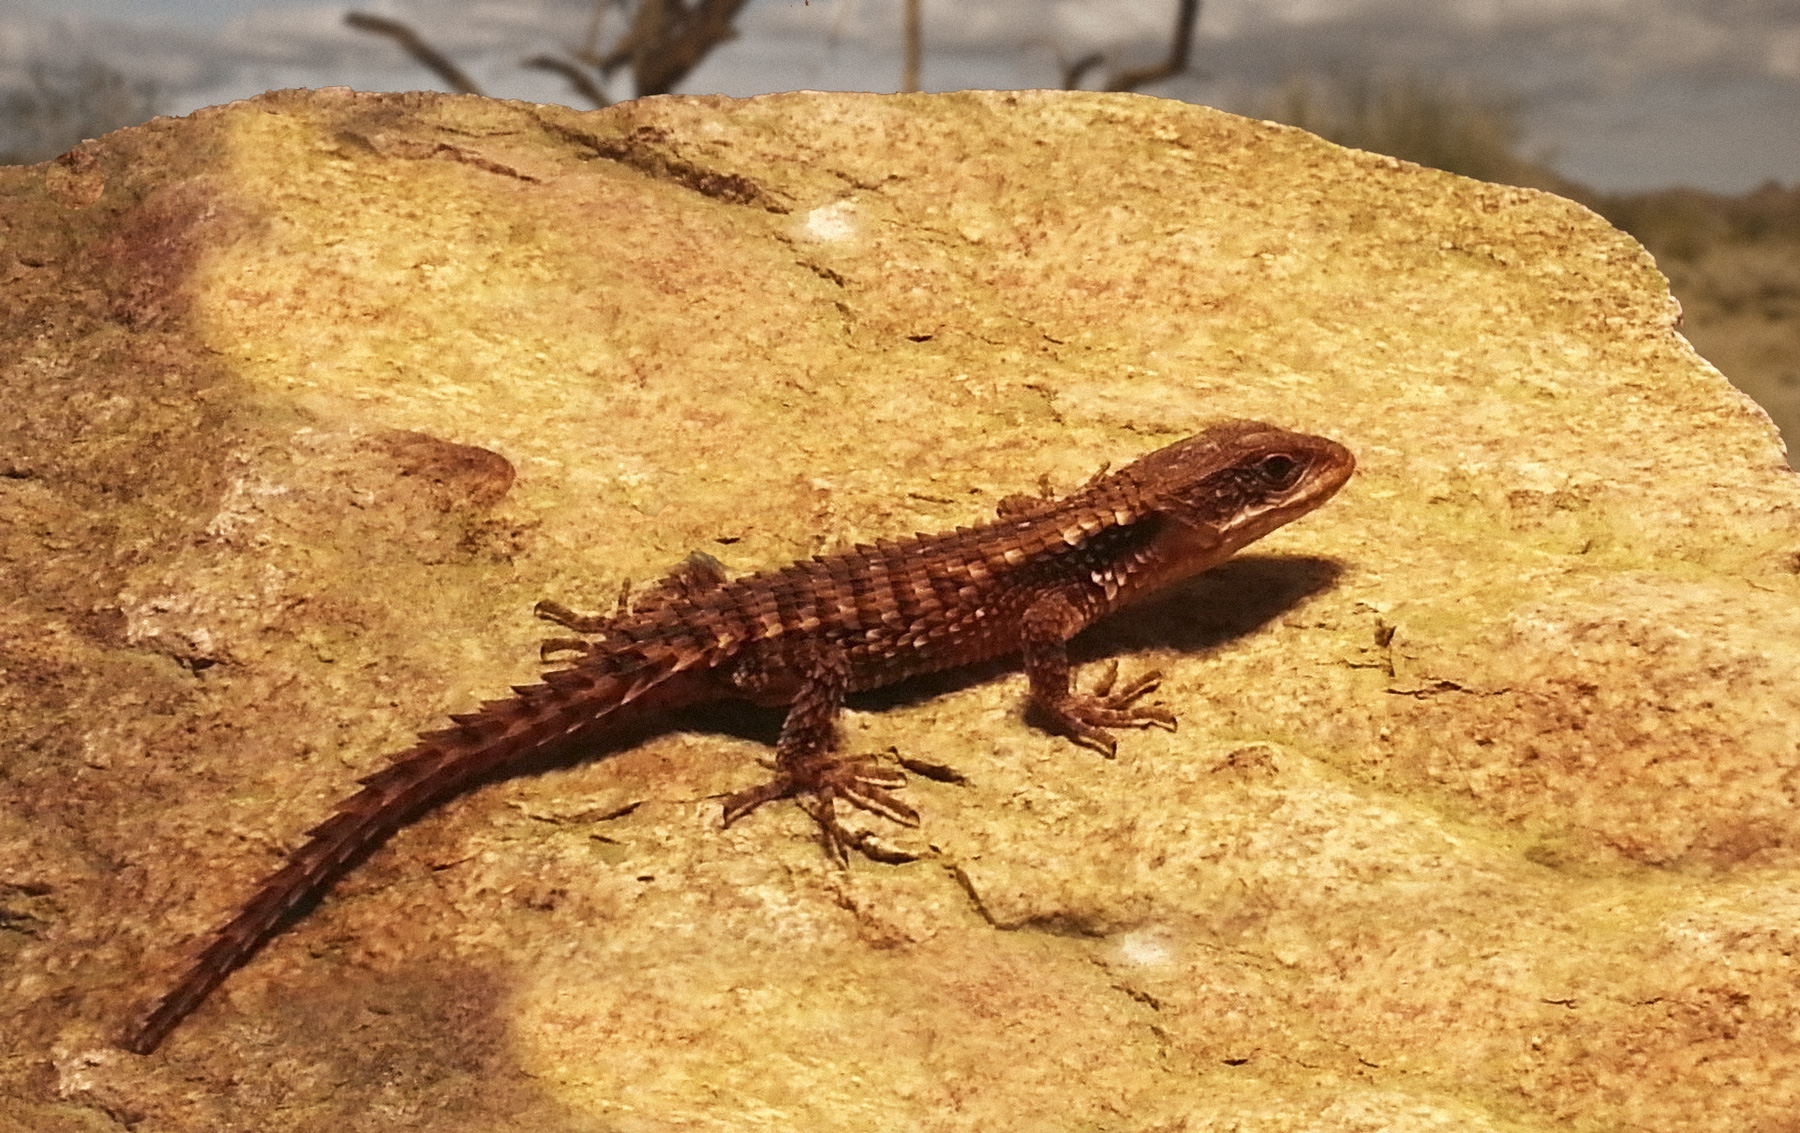 Angolan girdled lizard, spines intact